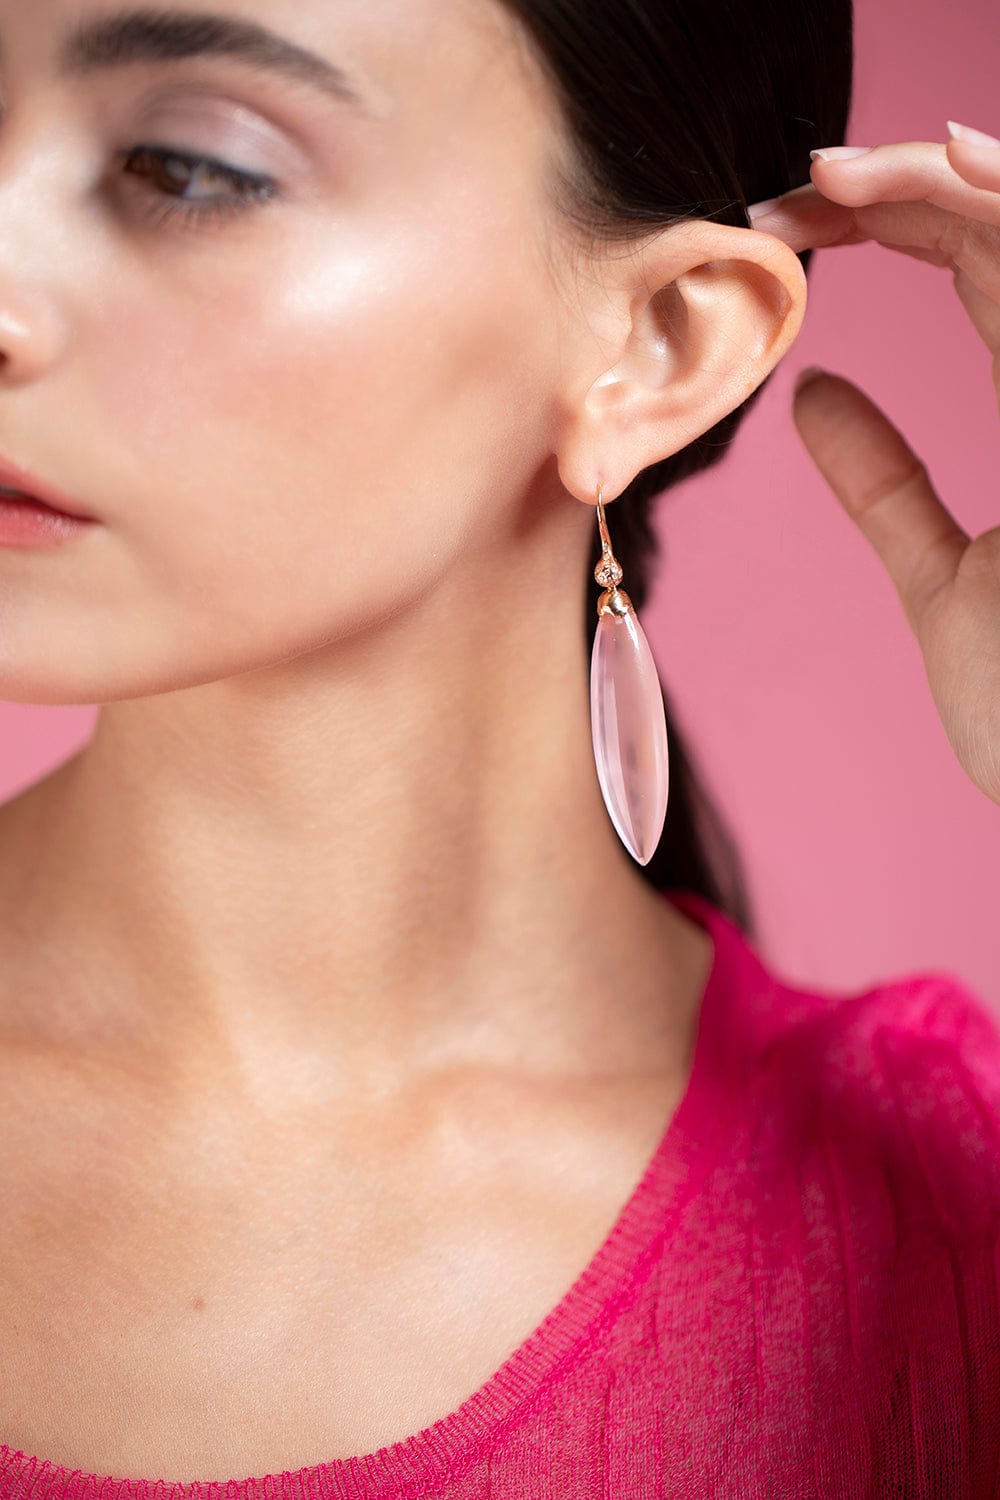 LUCIFER VIR HONESTUS-Rose Quartz and Diamond Earrings-ROSE GOLD